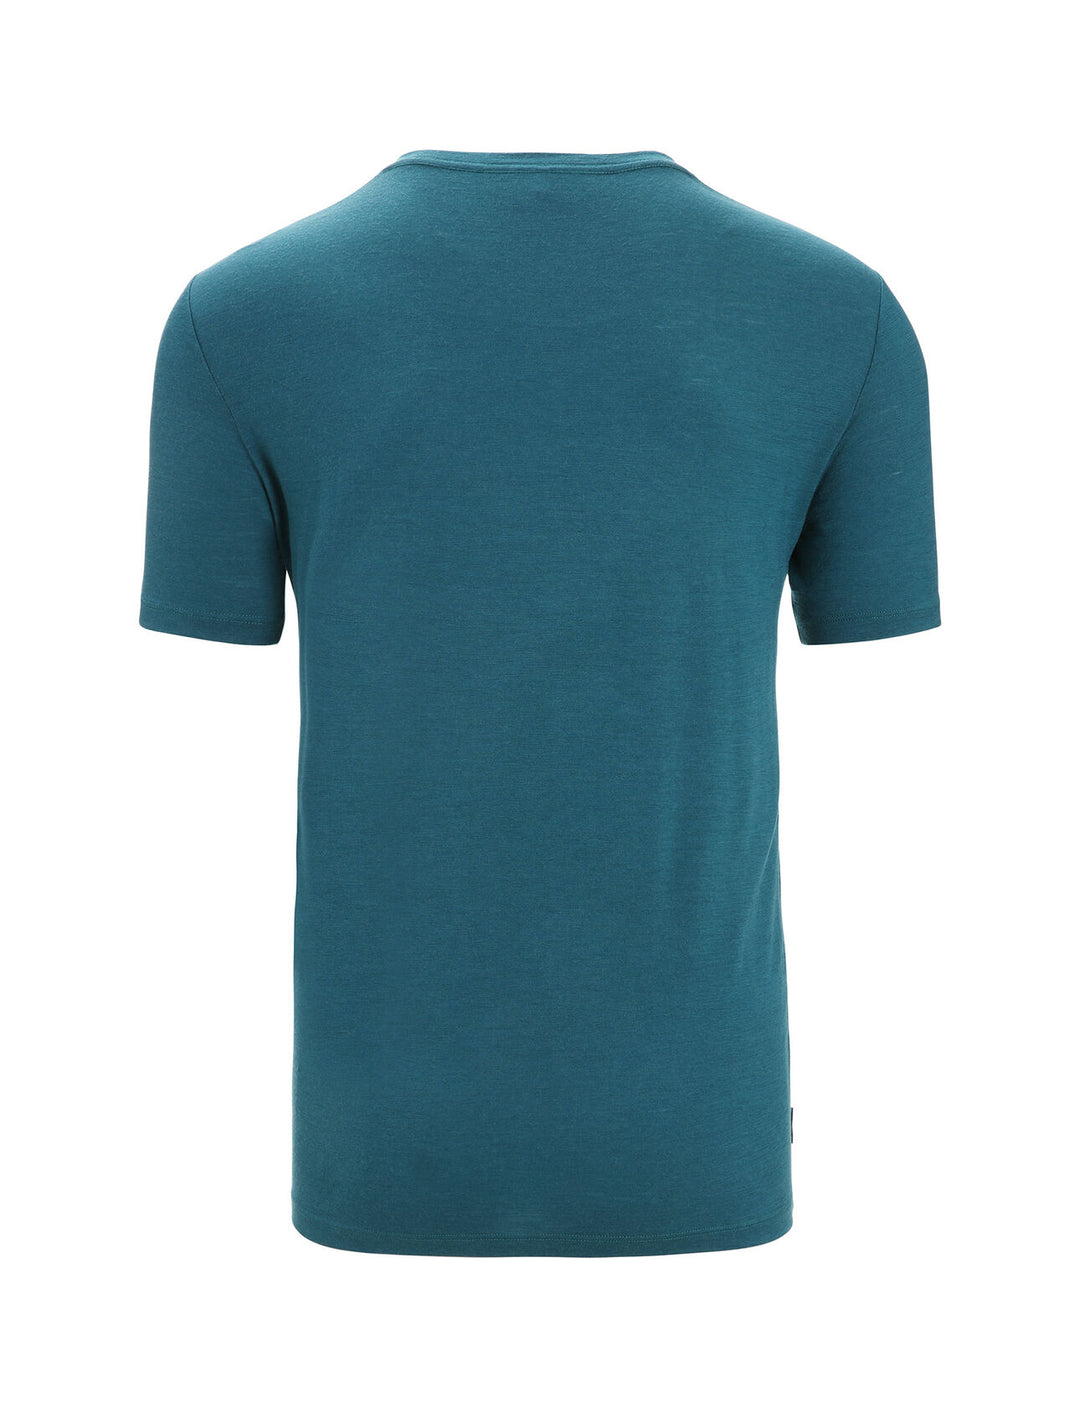 Mens Merino Tech Lite II Short Sleeve T-Shirt Cadence Paths